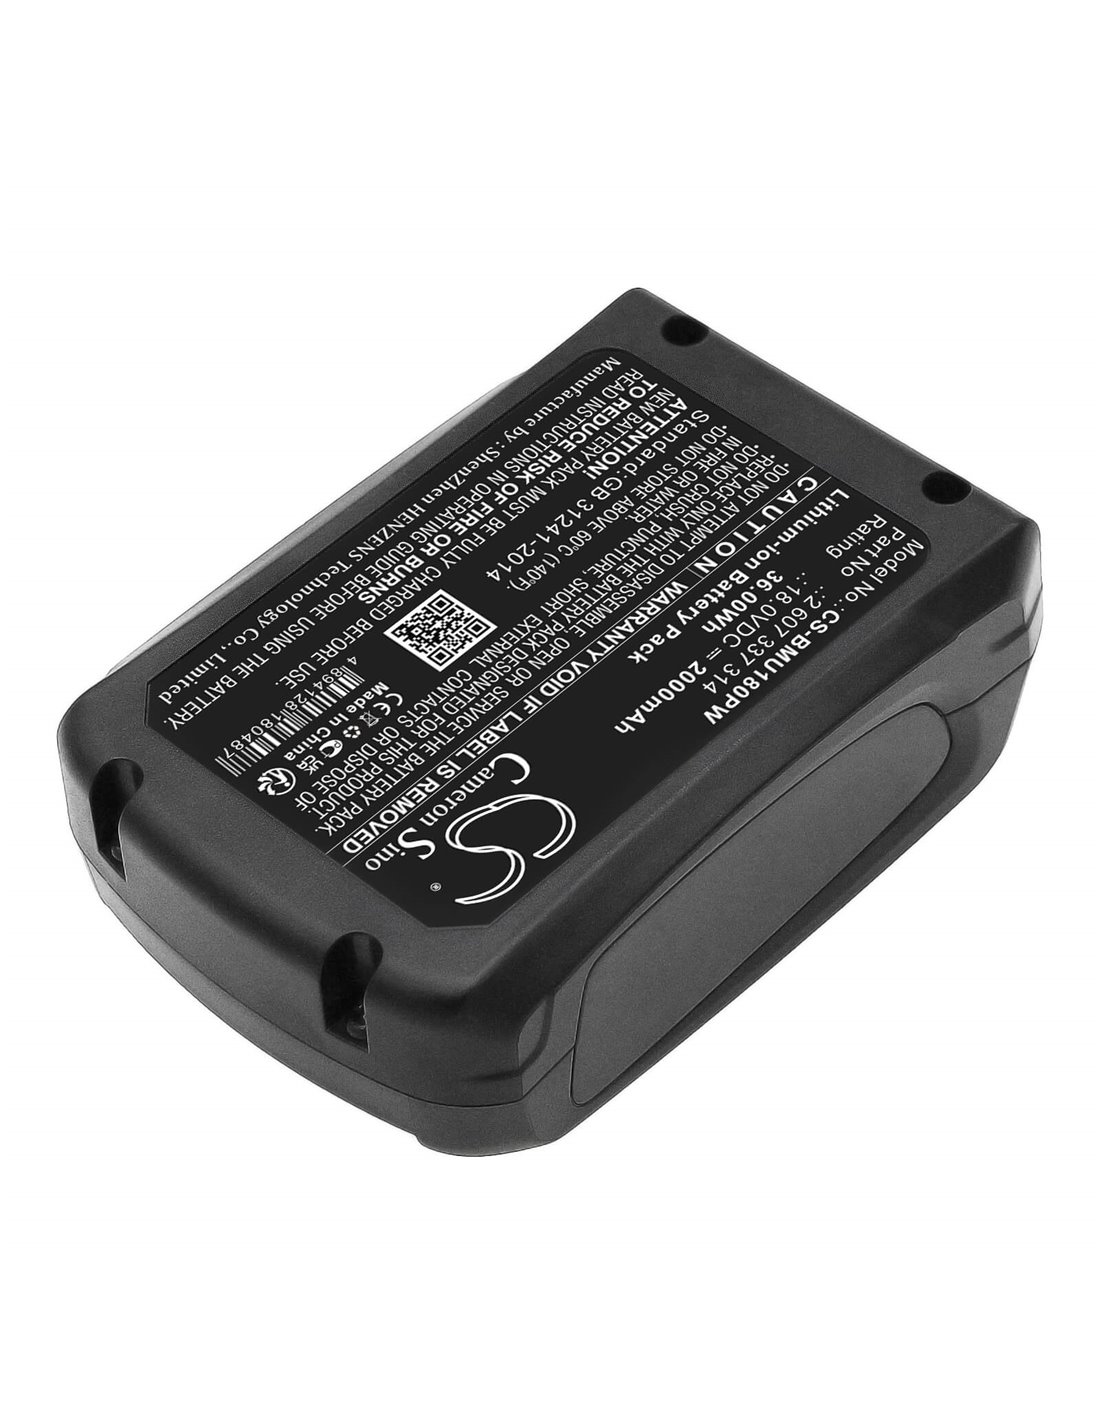 18.0V, Li-ion, 2000mAh, Battery fits Bosch Advancedglue 18v, 36.00Wh